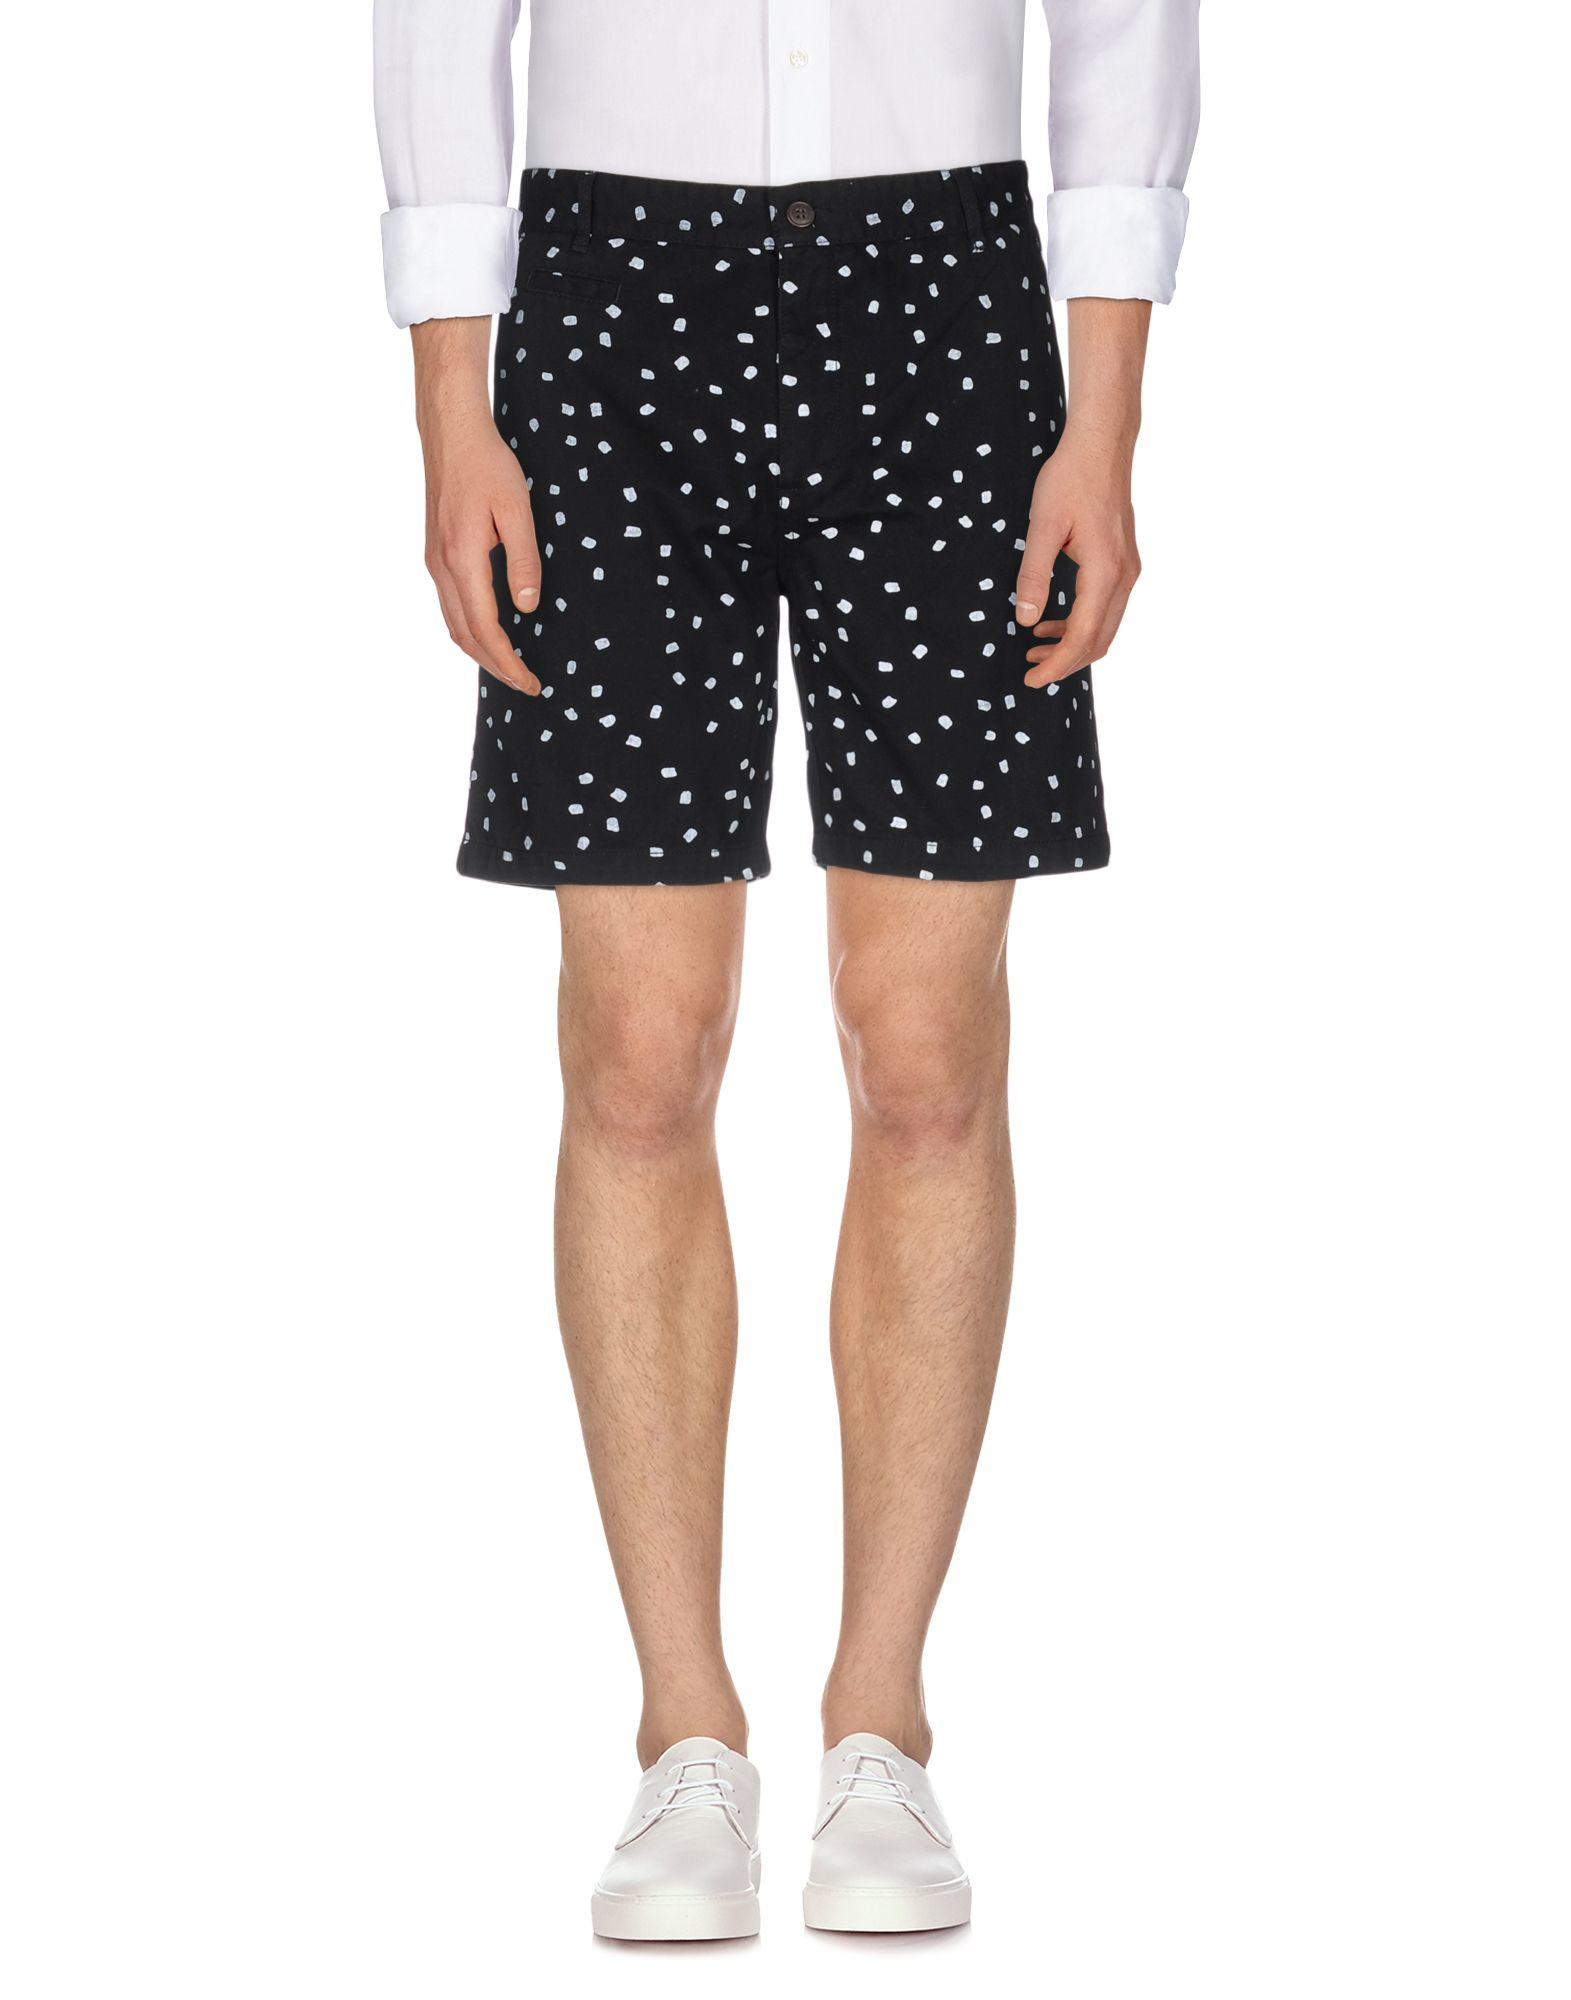 Lyst - Suit Bermuda Shorts in Black for Men